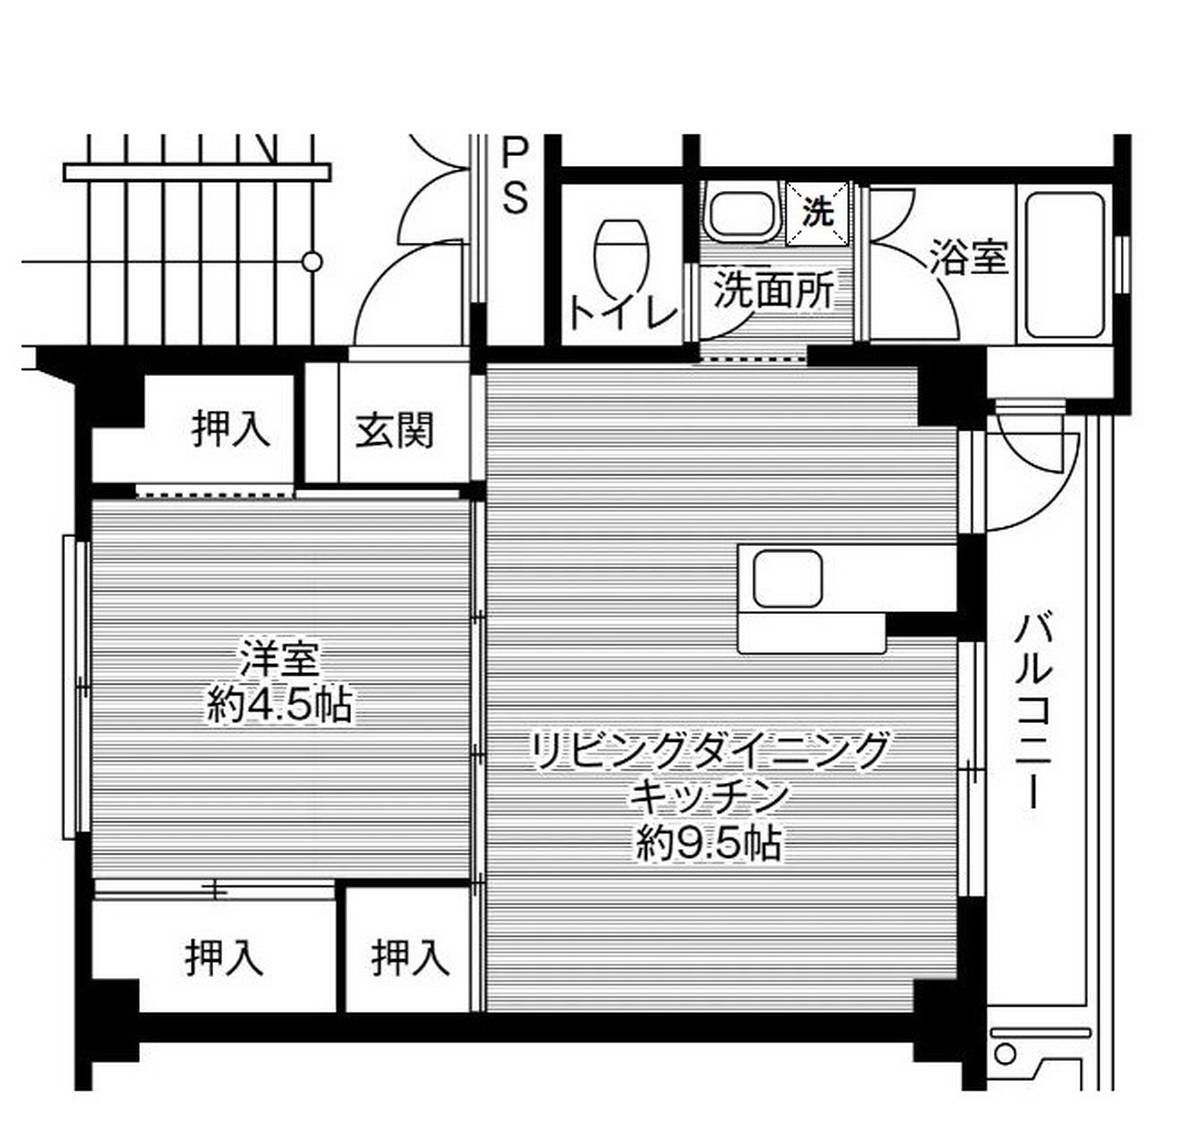 1LDK floorplan of Village House Misono in Oita-shi